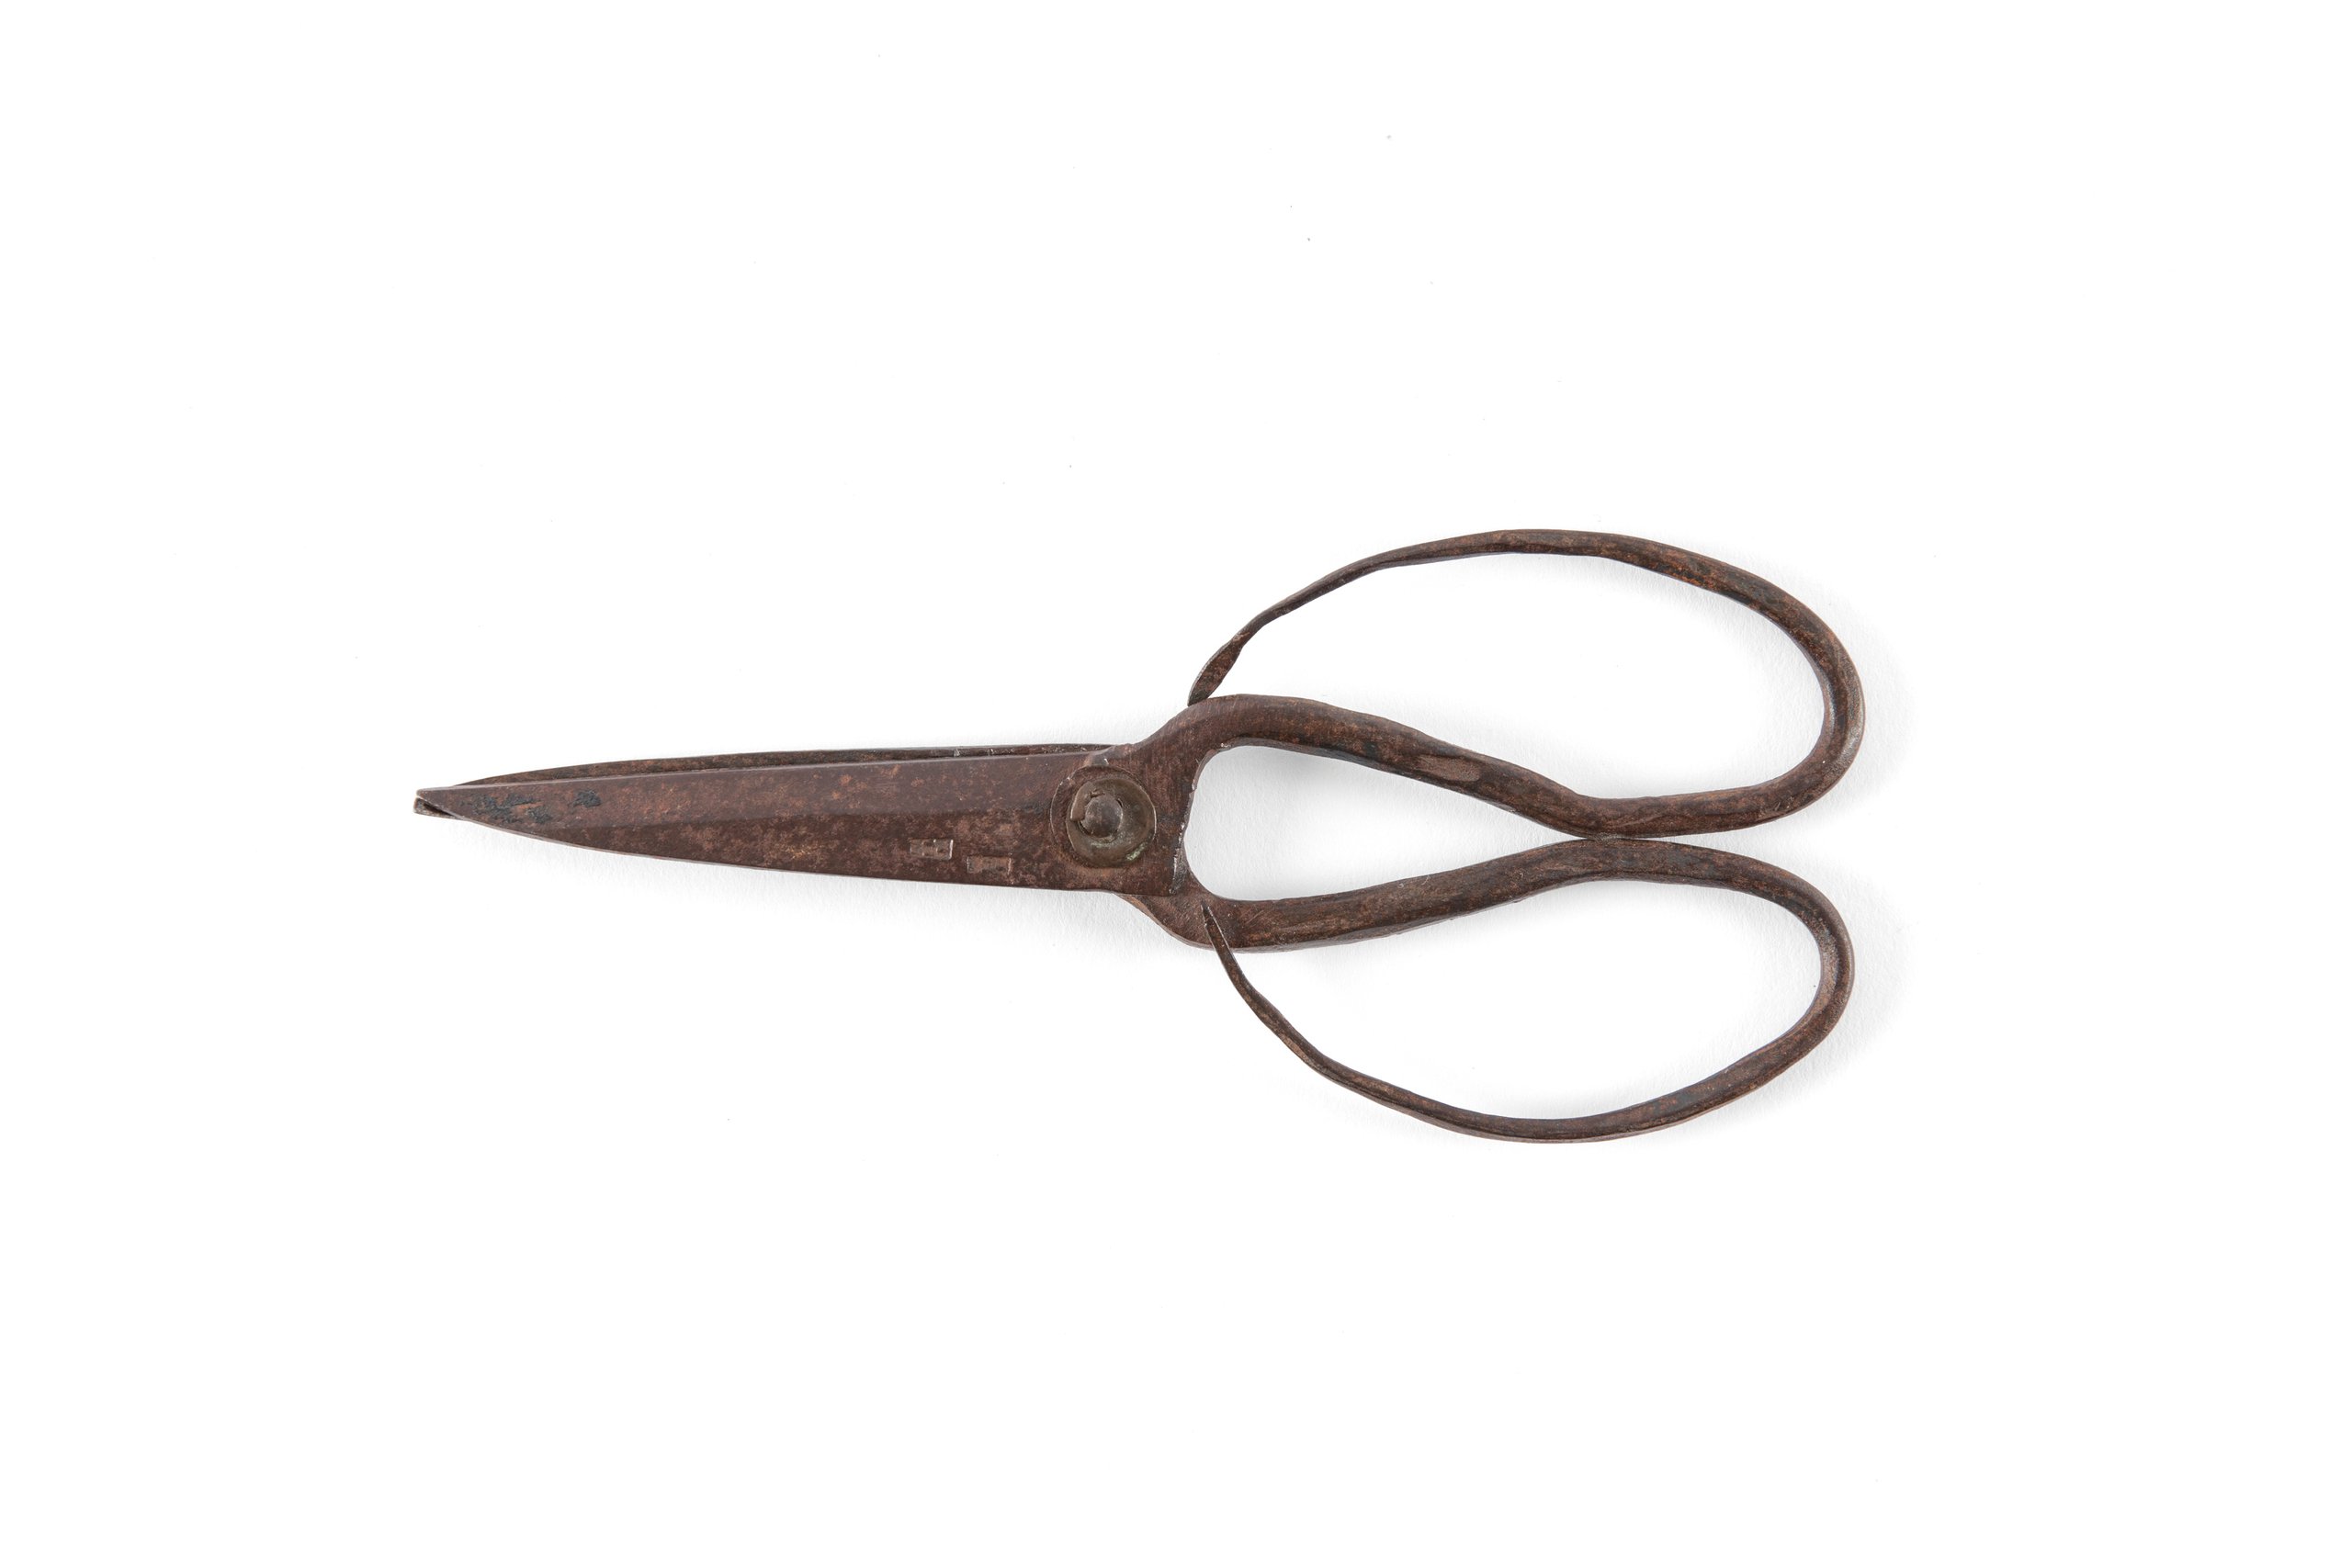 Hand-forged iron scissors